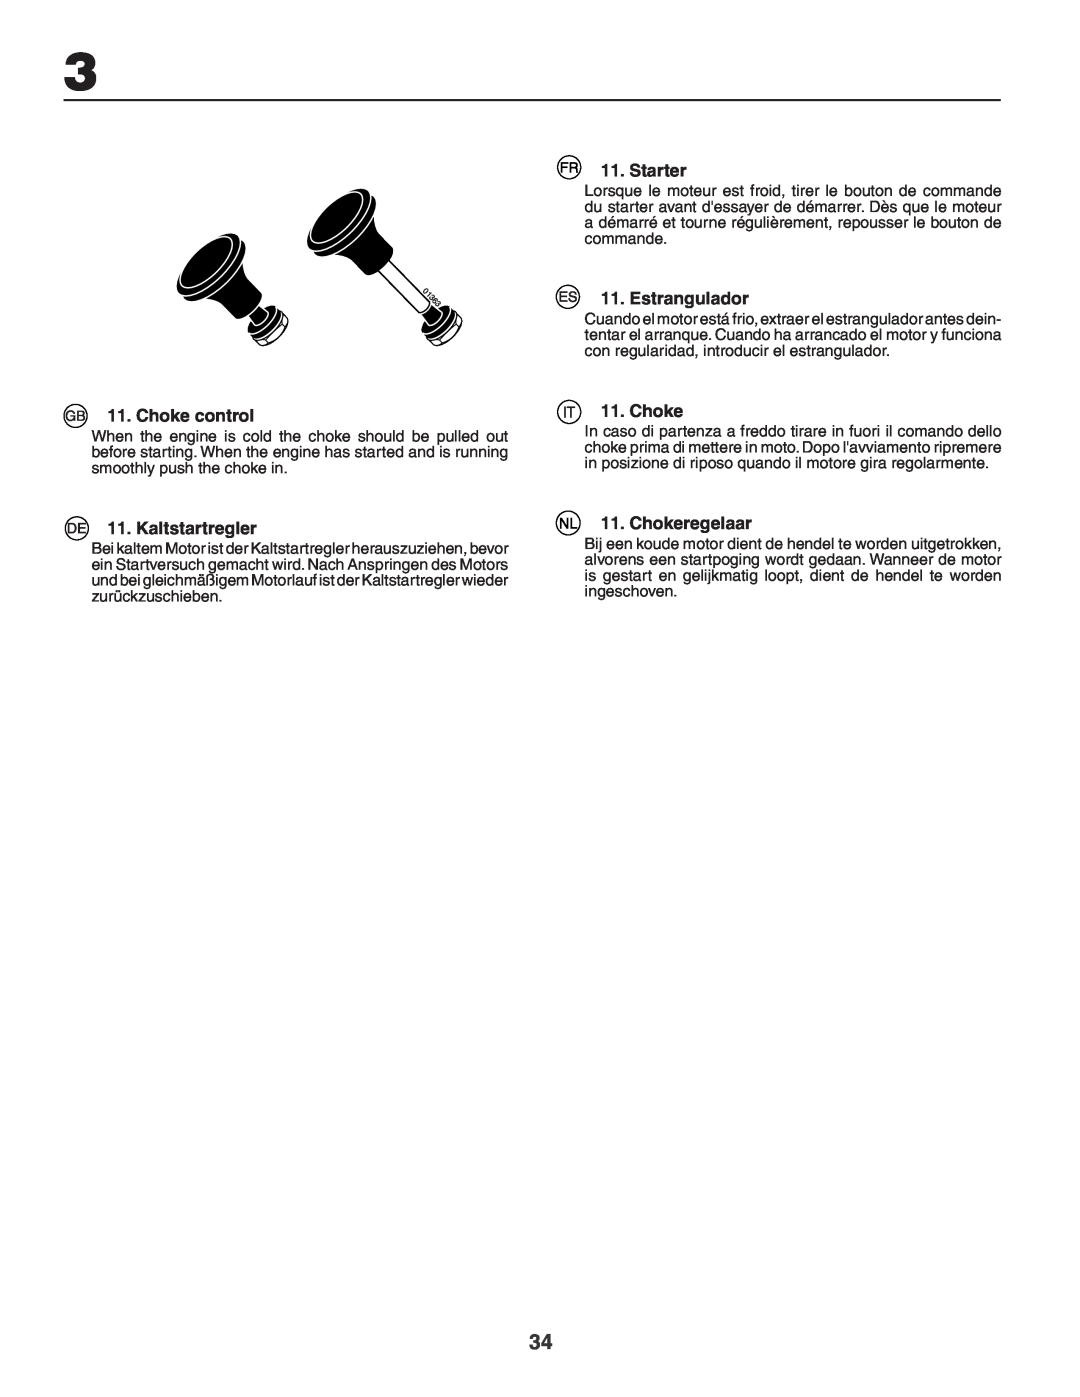 Husqvarna YTH180XP instruction manual Choke control, Kaltstartregler, Starter, Estrangulador, Chokeregelaar 